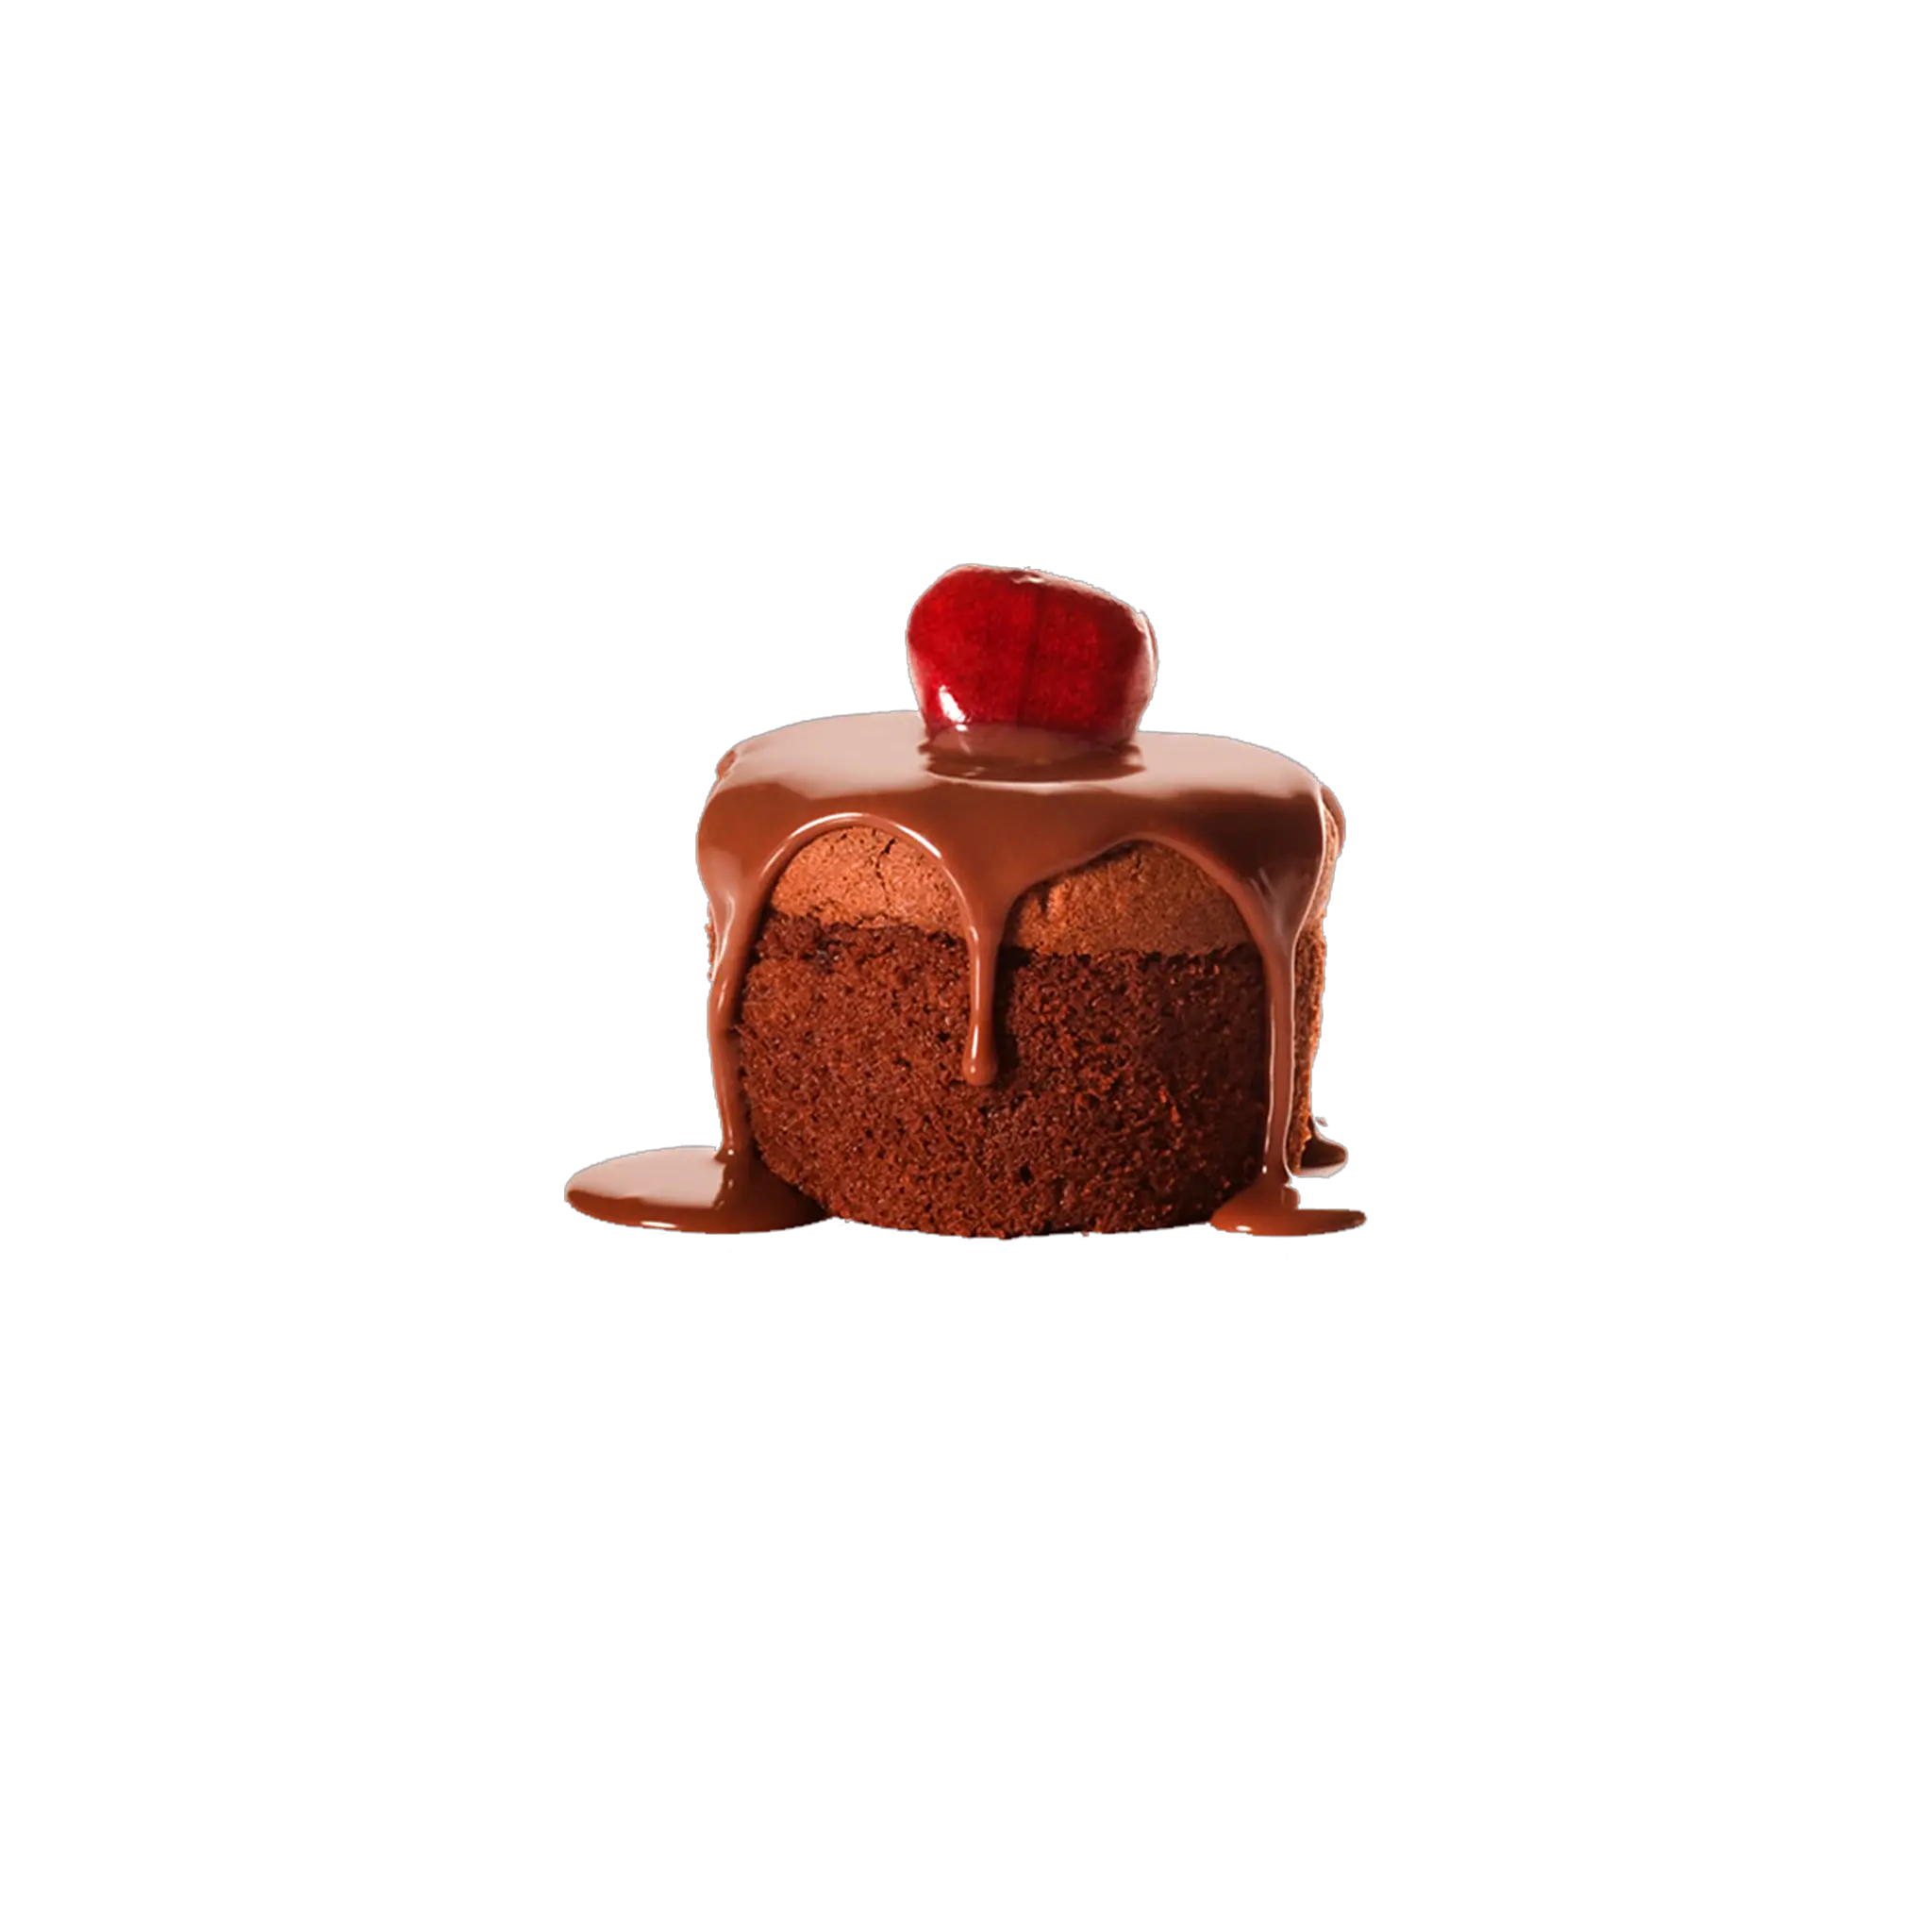 Hd Cake Png Image Free Download Chocolate Cake Cake Transparent